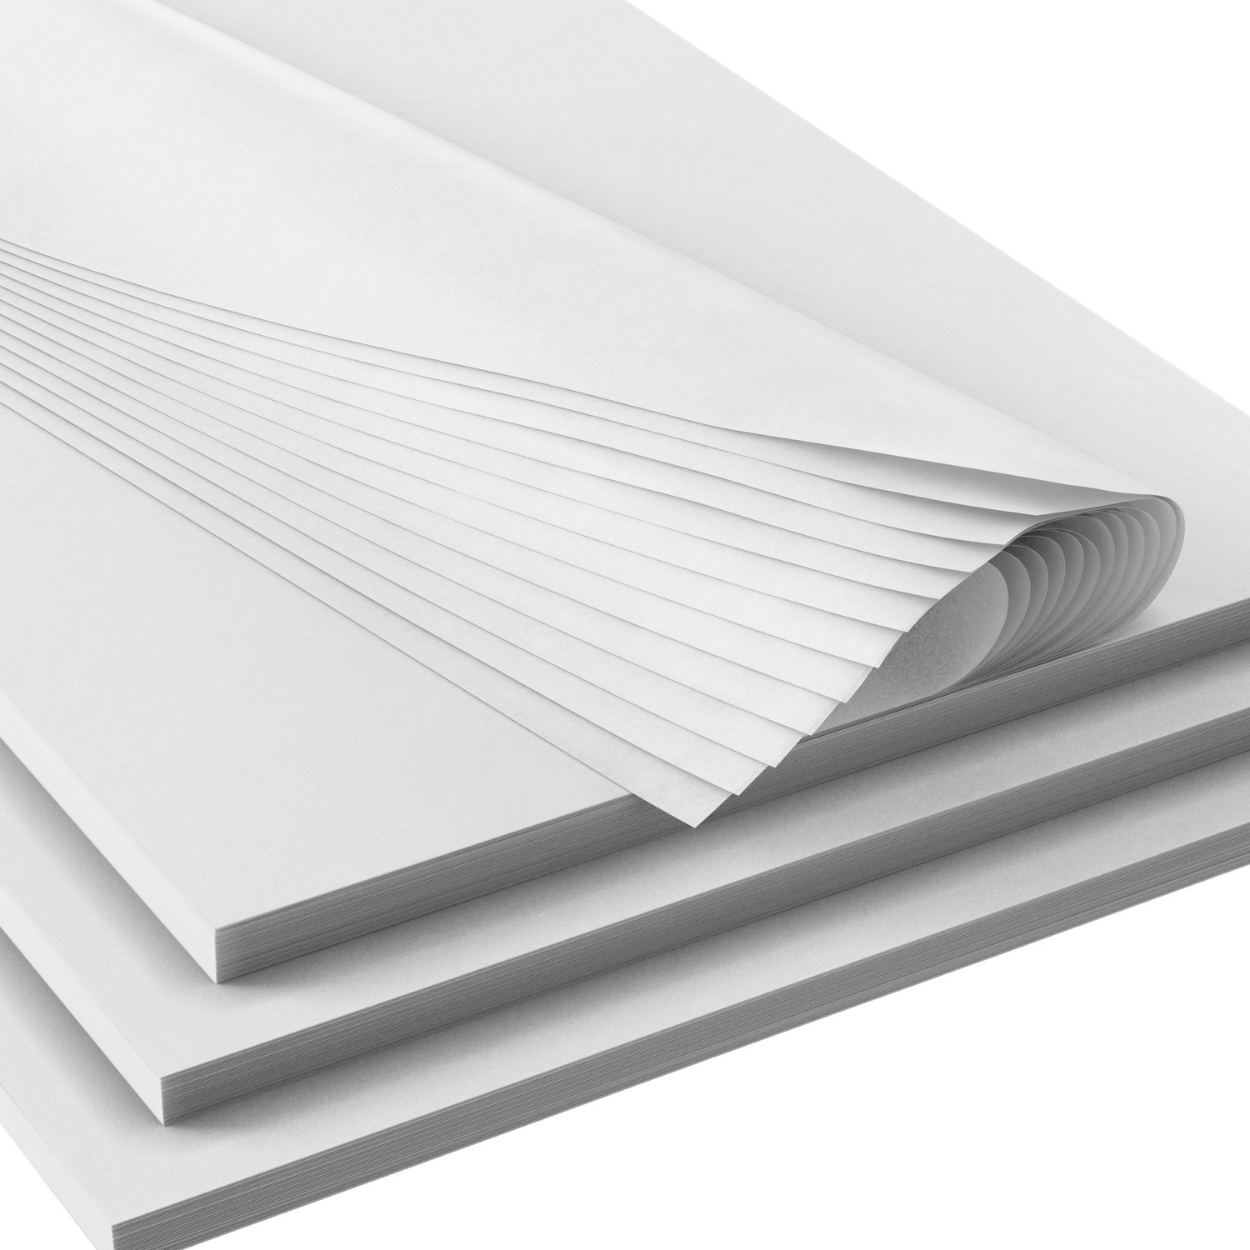 White Glitter Tissue Paper 20 X 30 by Satin Wrap | Quantity: 200